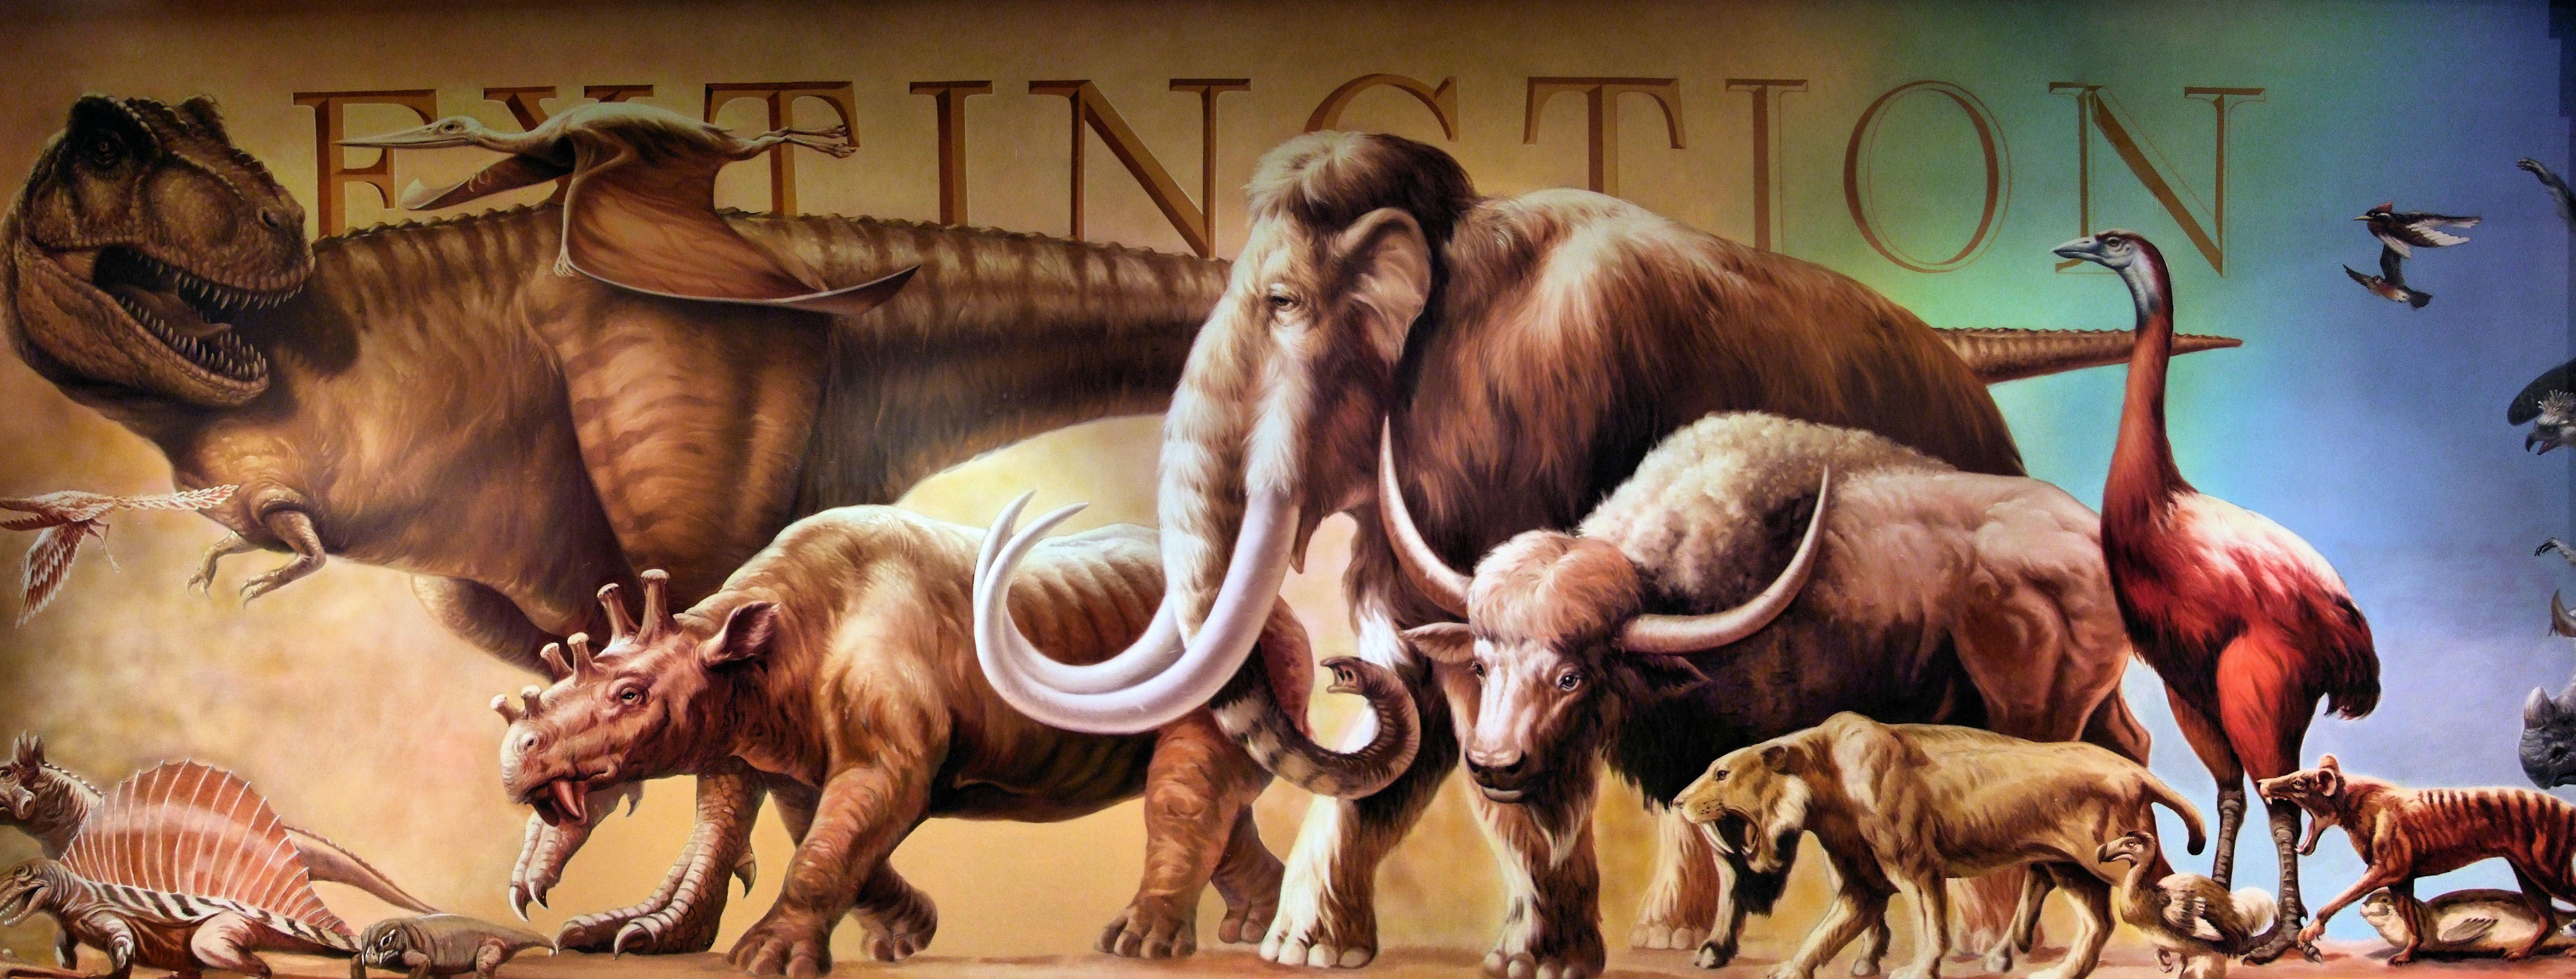 Disney's Animal Kingdom image Extinction poster HD wallpaper